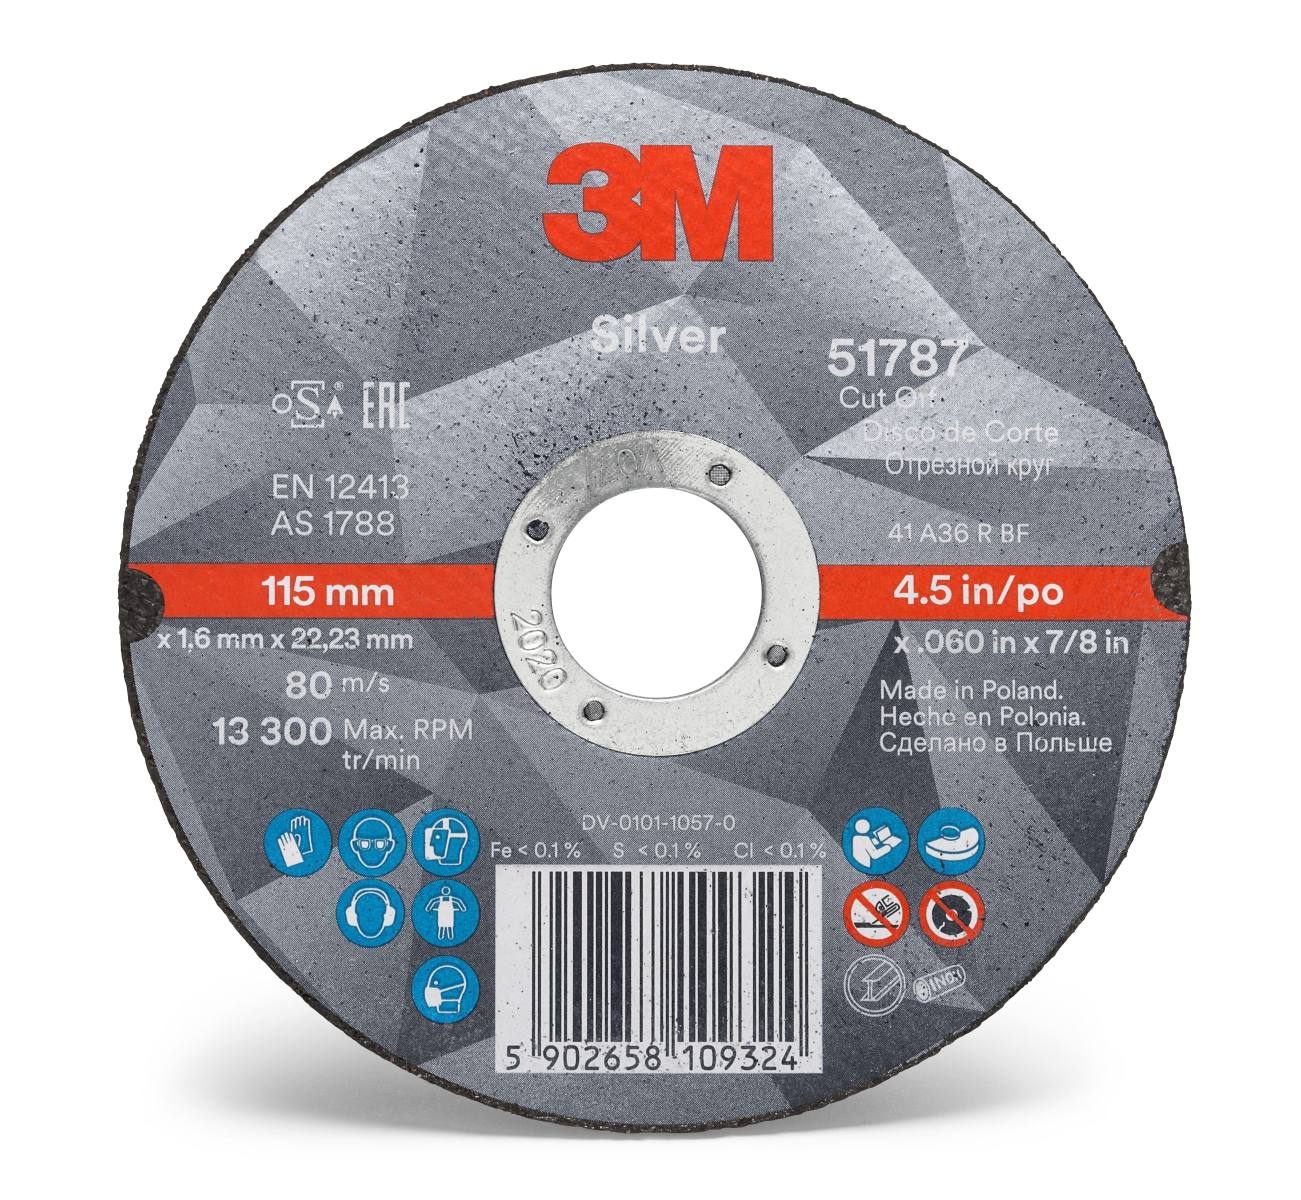 3M Silver Cut-Off Wheel cutting disc, 115 mm, 2.5 mm, 22.23 mm, T42, 51800